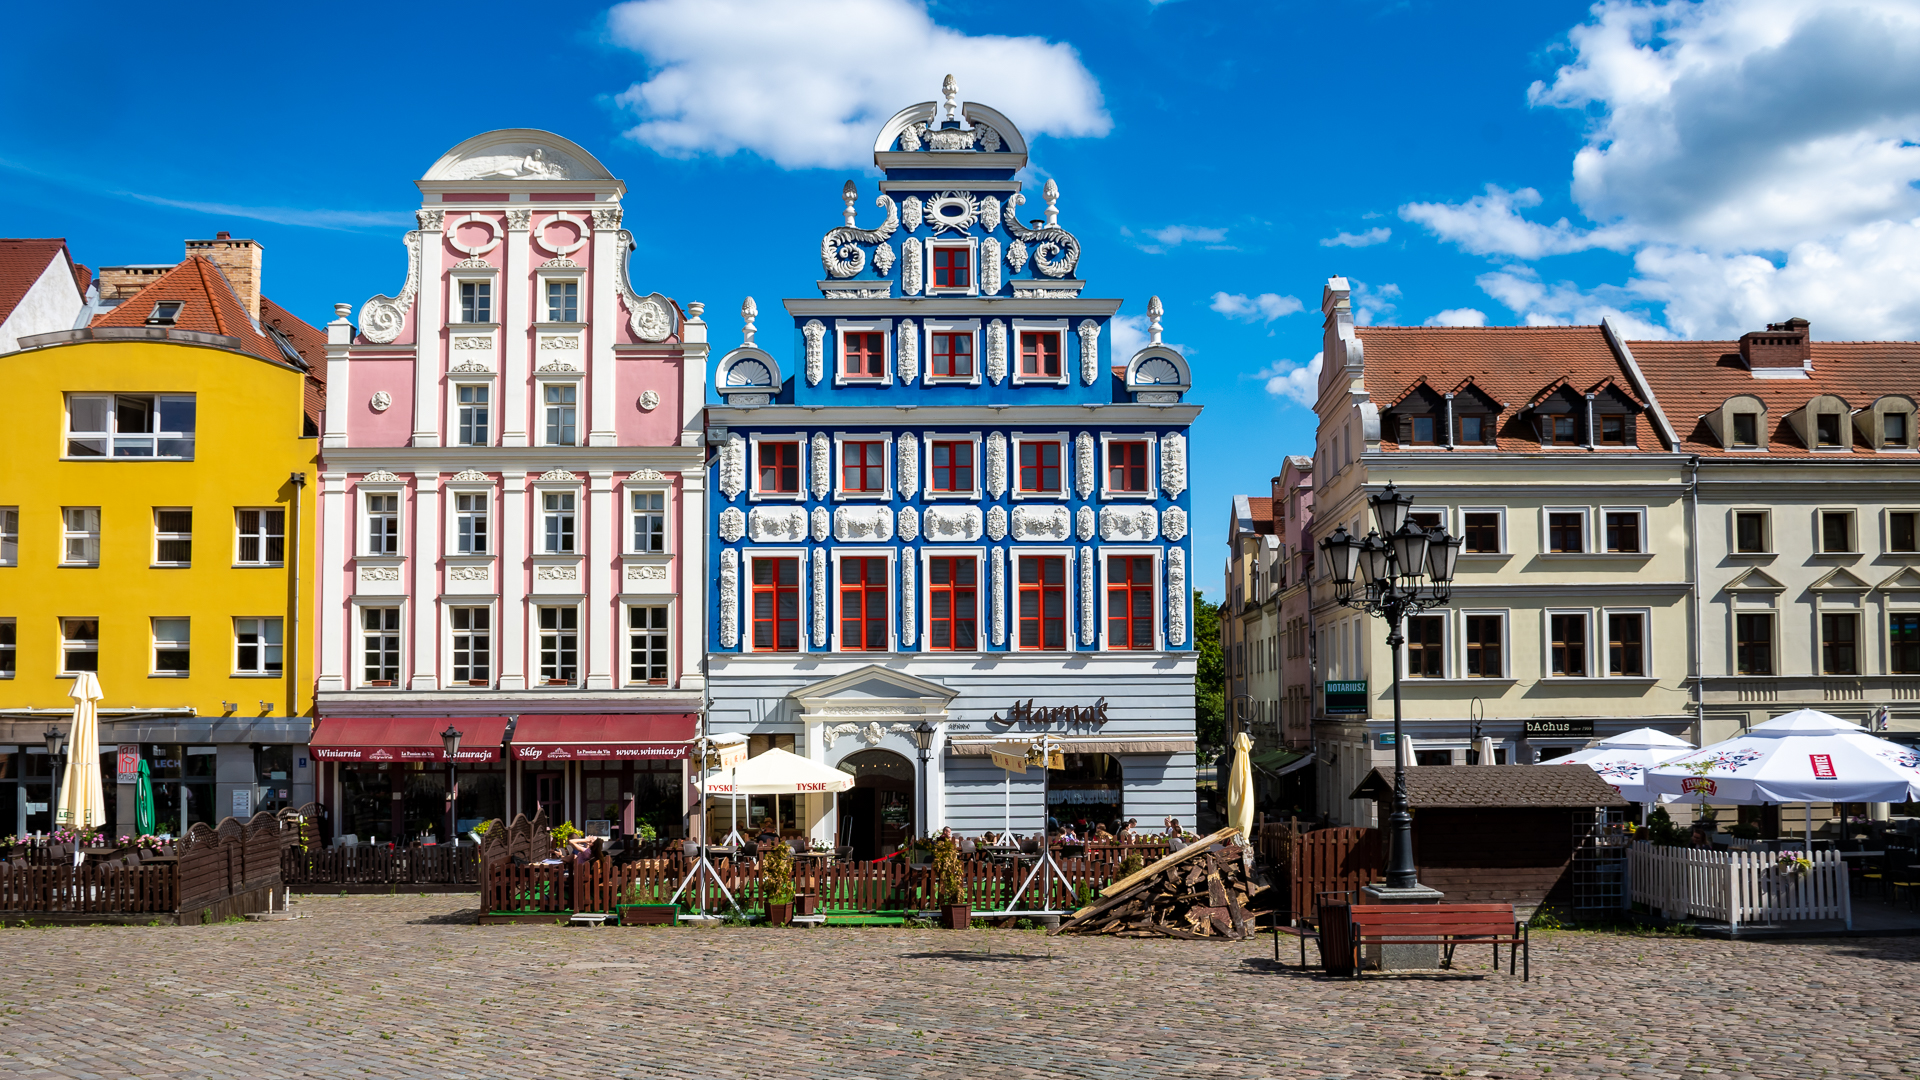 Szczecin Old Town